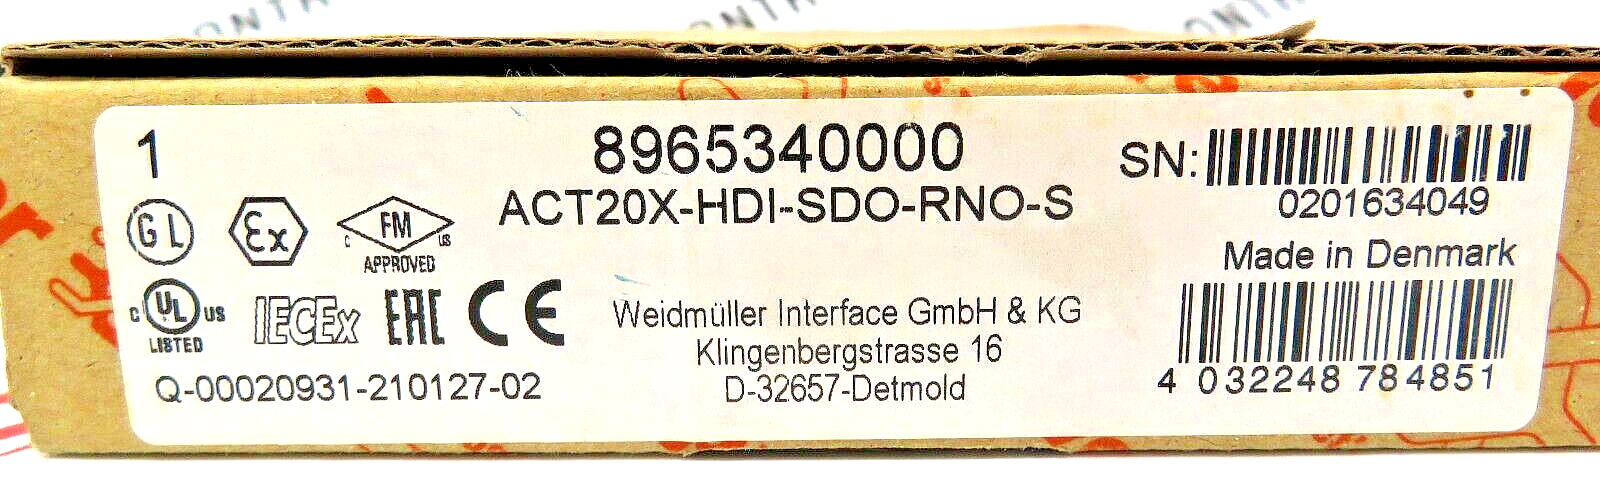 Weidmuller ACT20X-HDI-SDO-RNO-S 8965340000 1-CHNL. EX Signal Isolating Converter